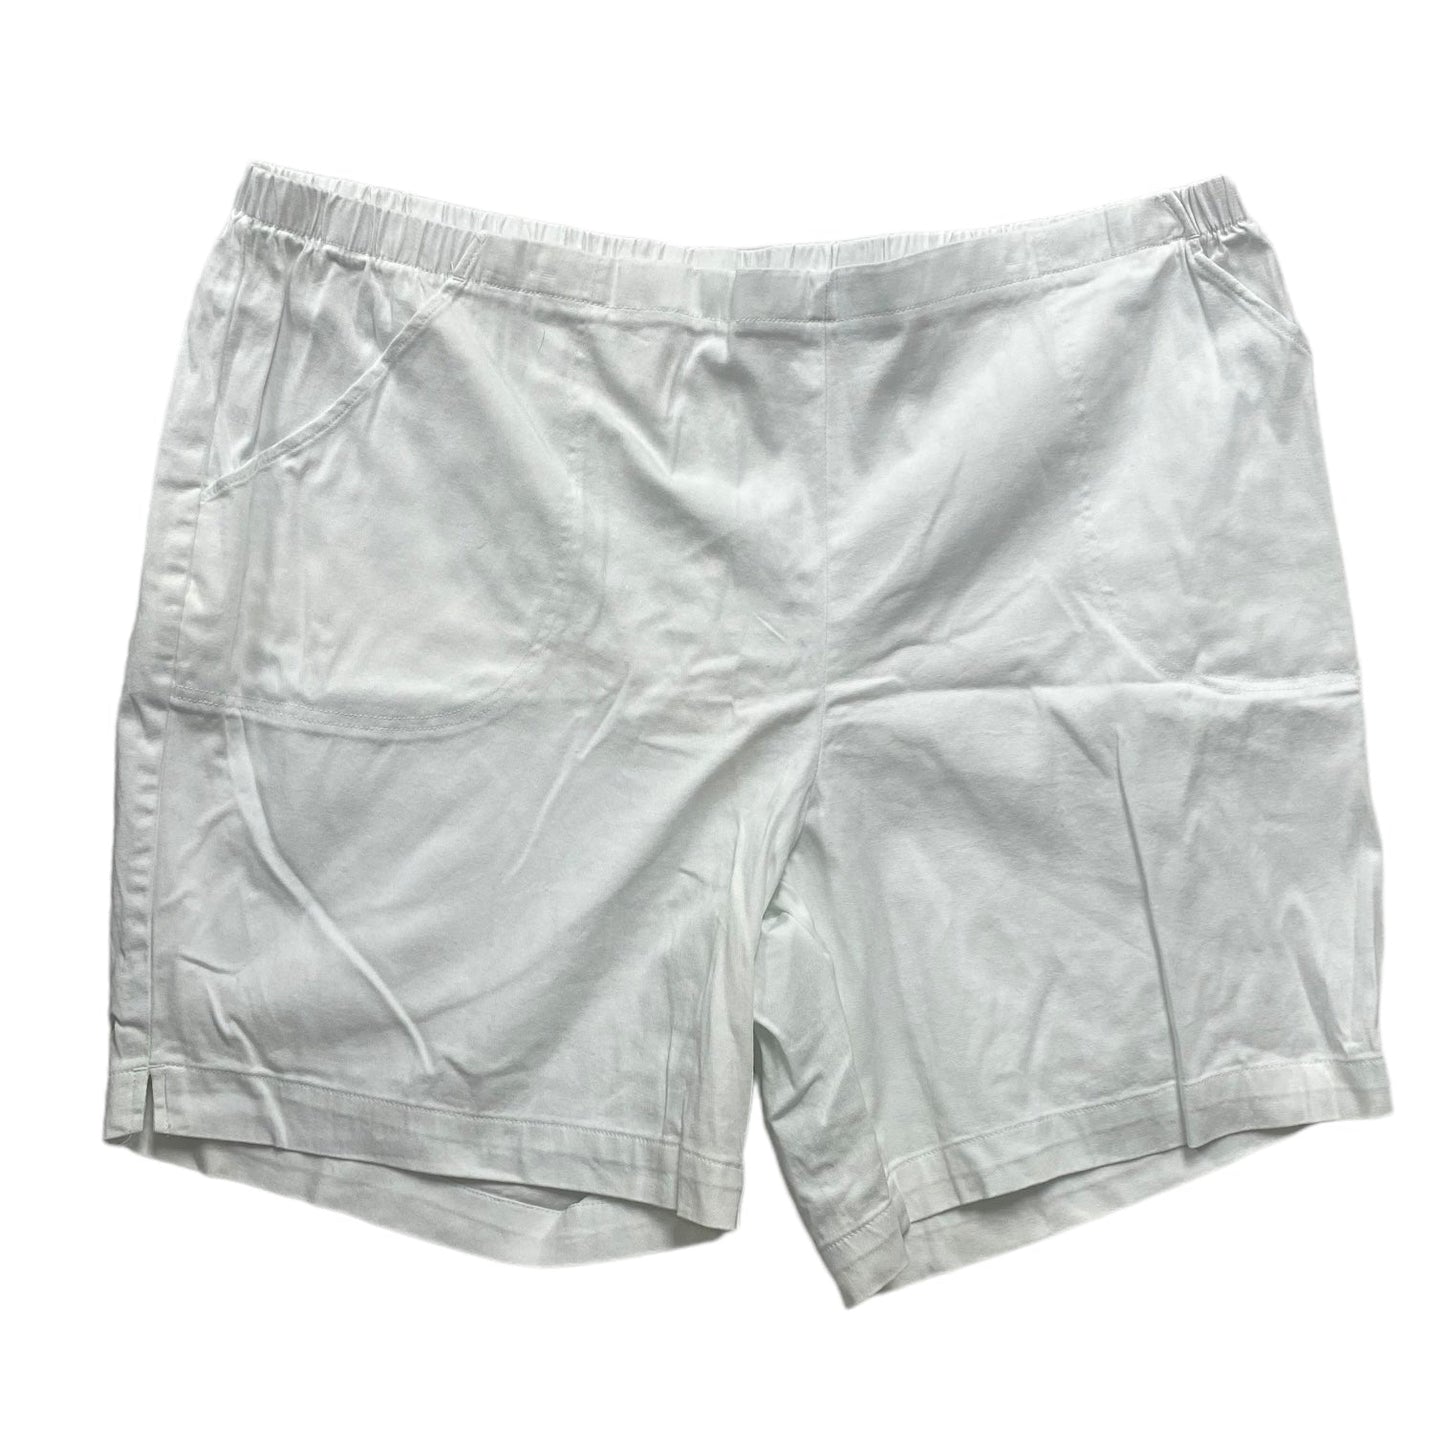 White Shorts jms, Size 4x